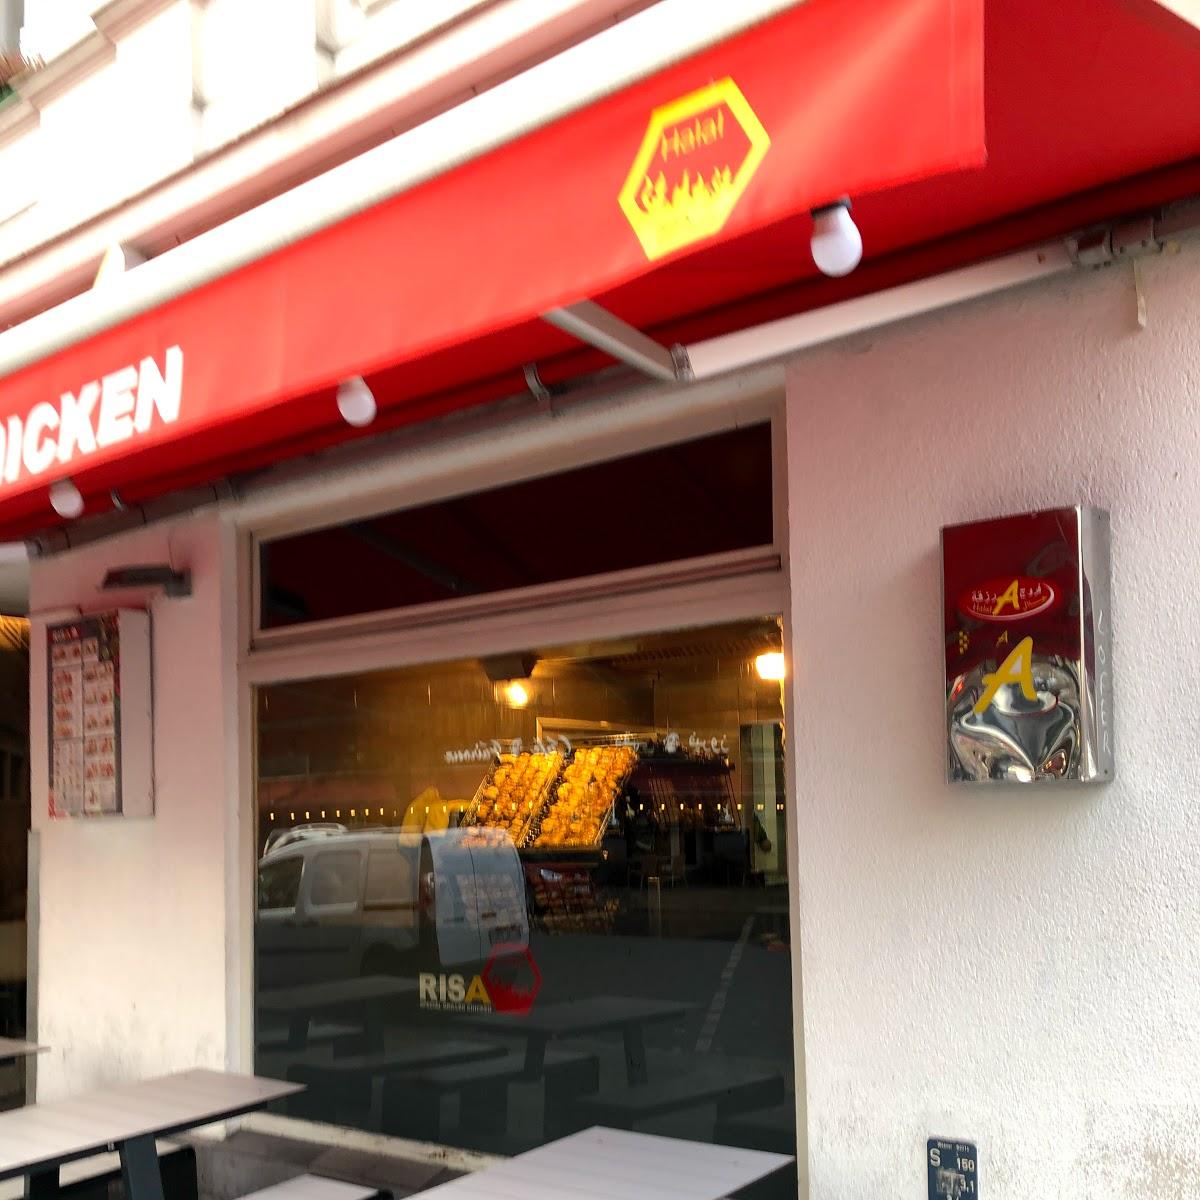 Restaurant "Risa Chicken" in Berlin